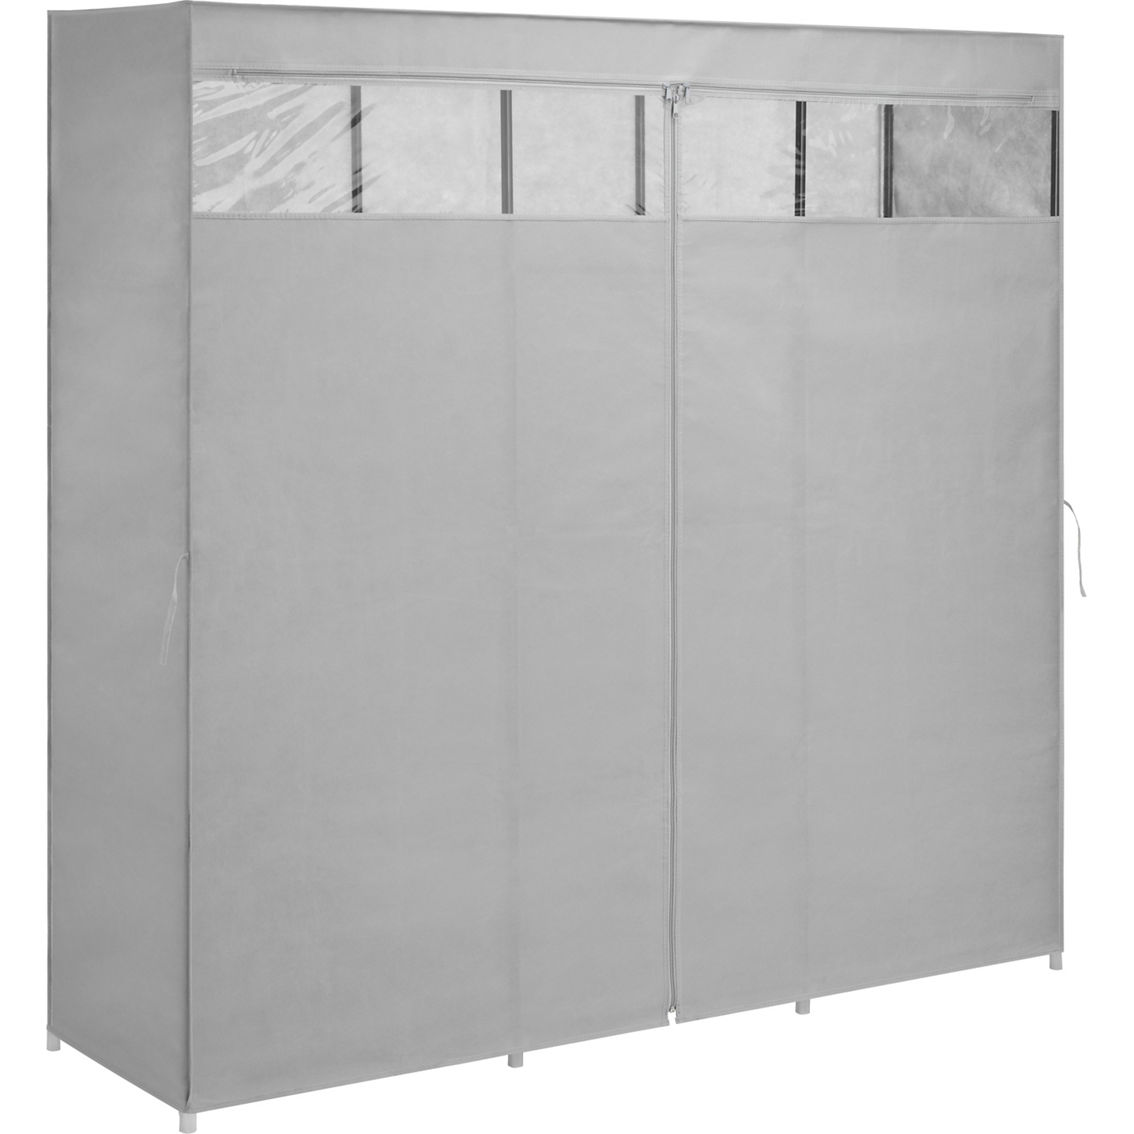 Whitmor Covered Wardrobe with Storage Shelves - Image 2 of 4